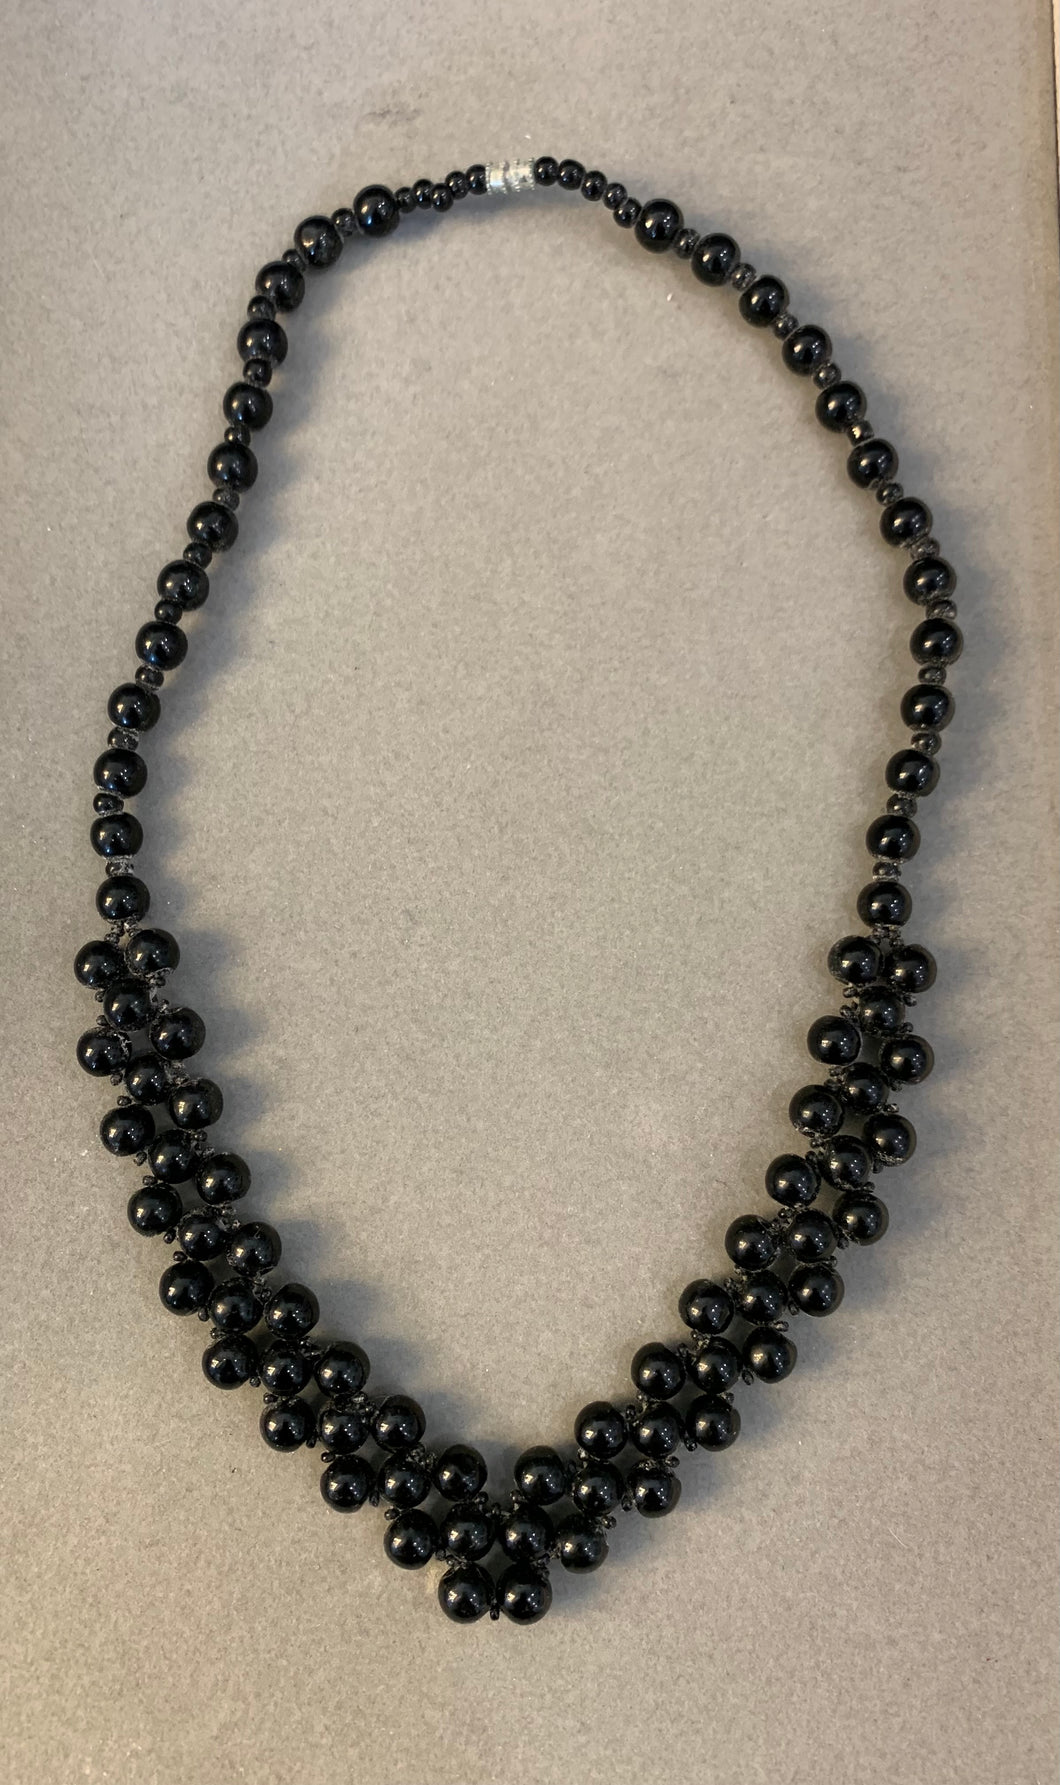 Handmade Gemstone Necklaces